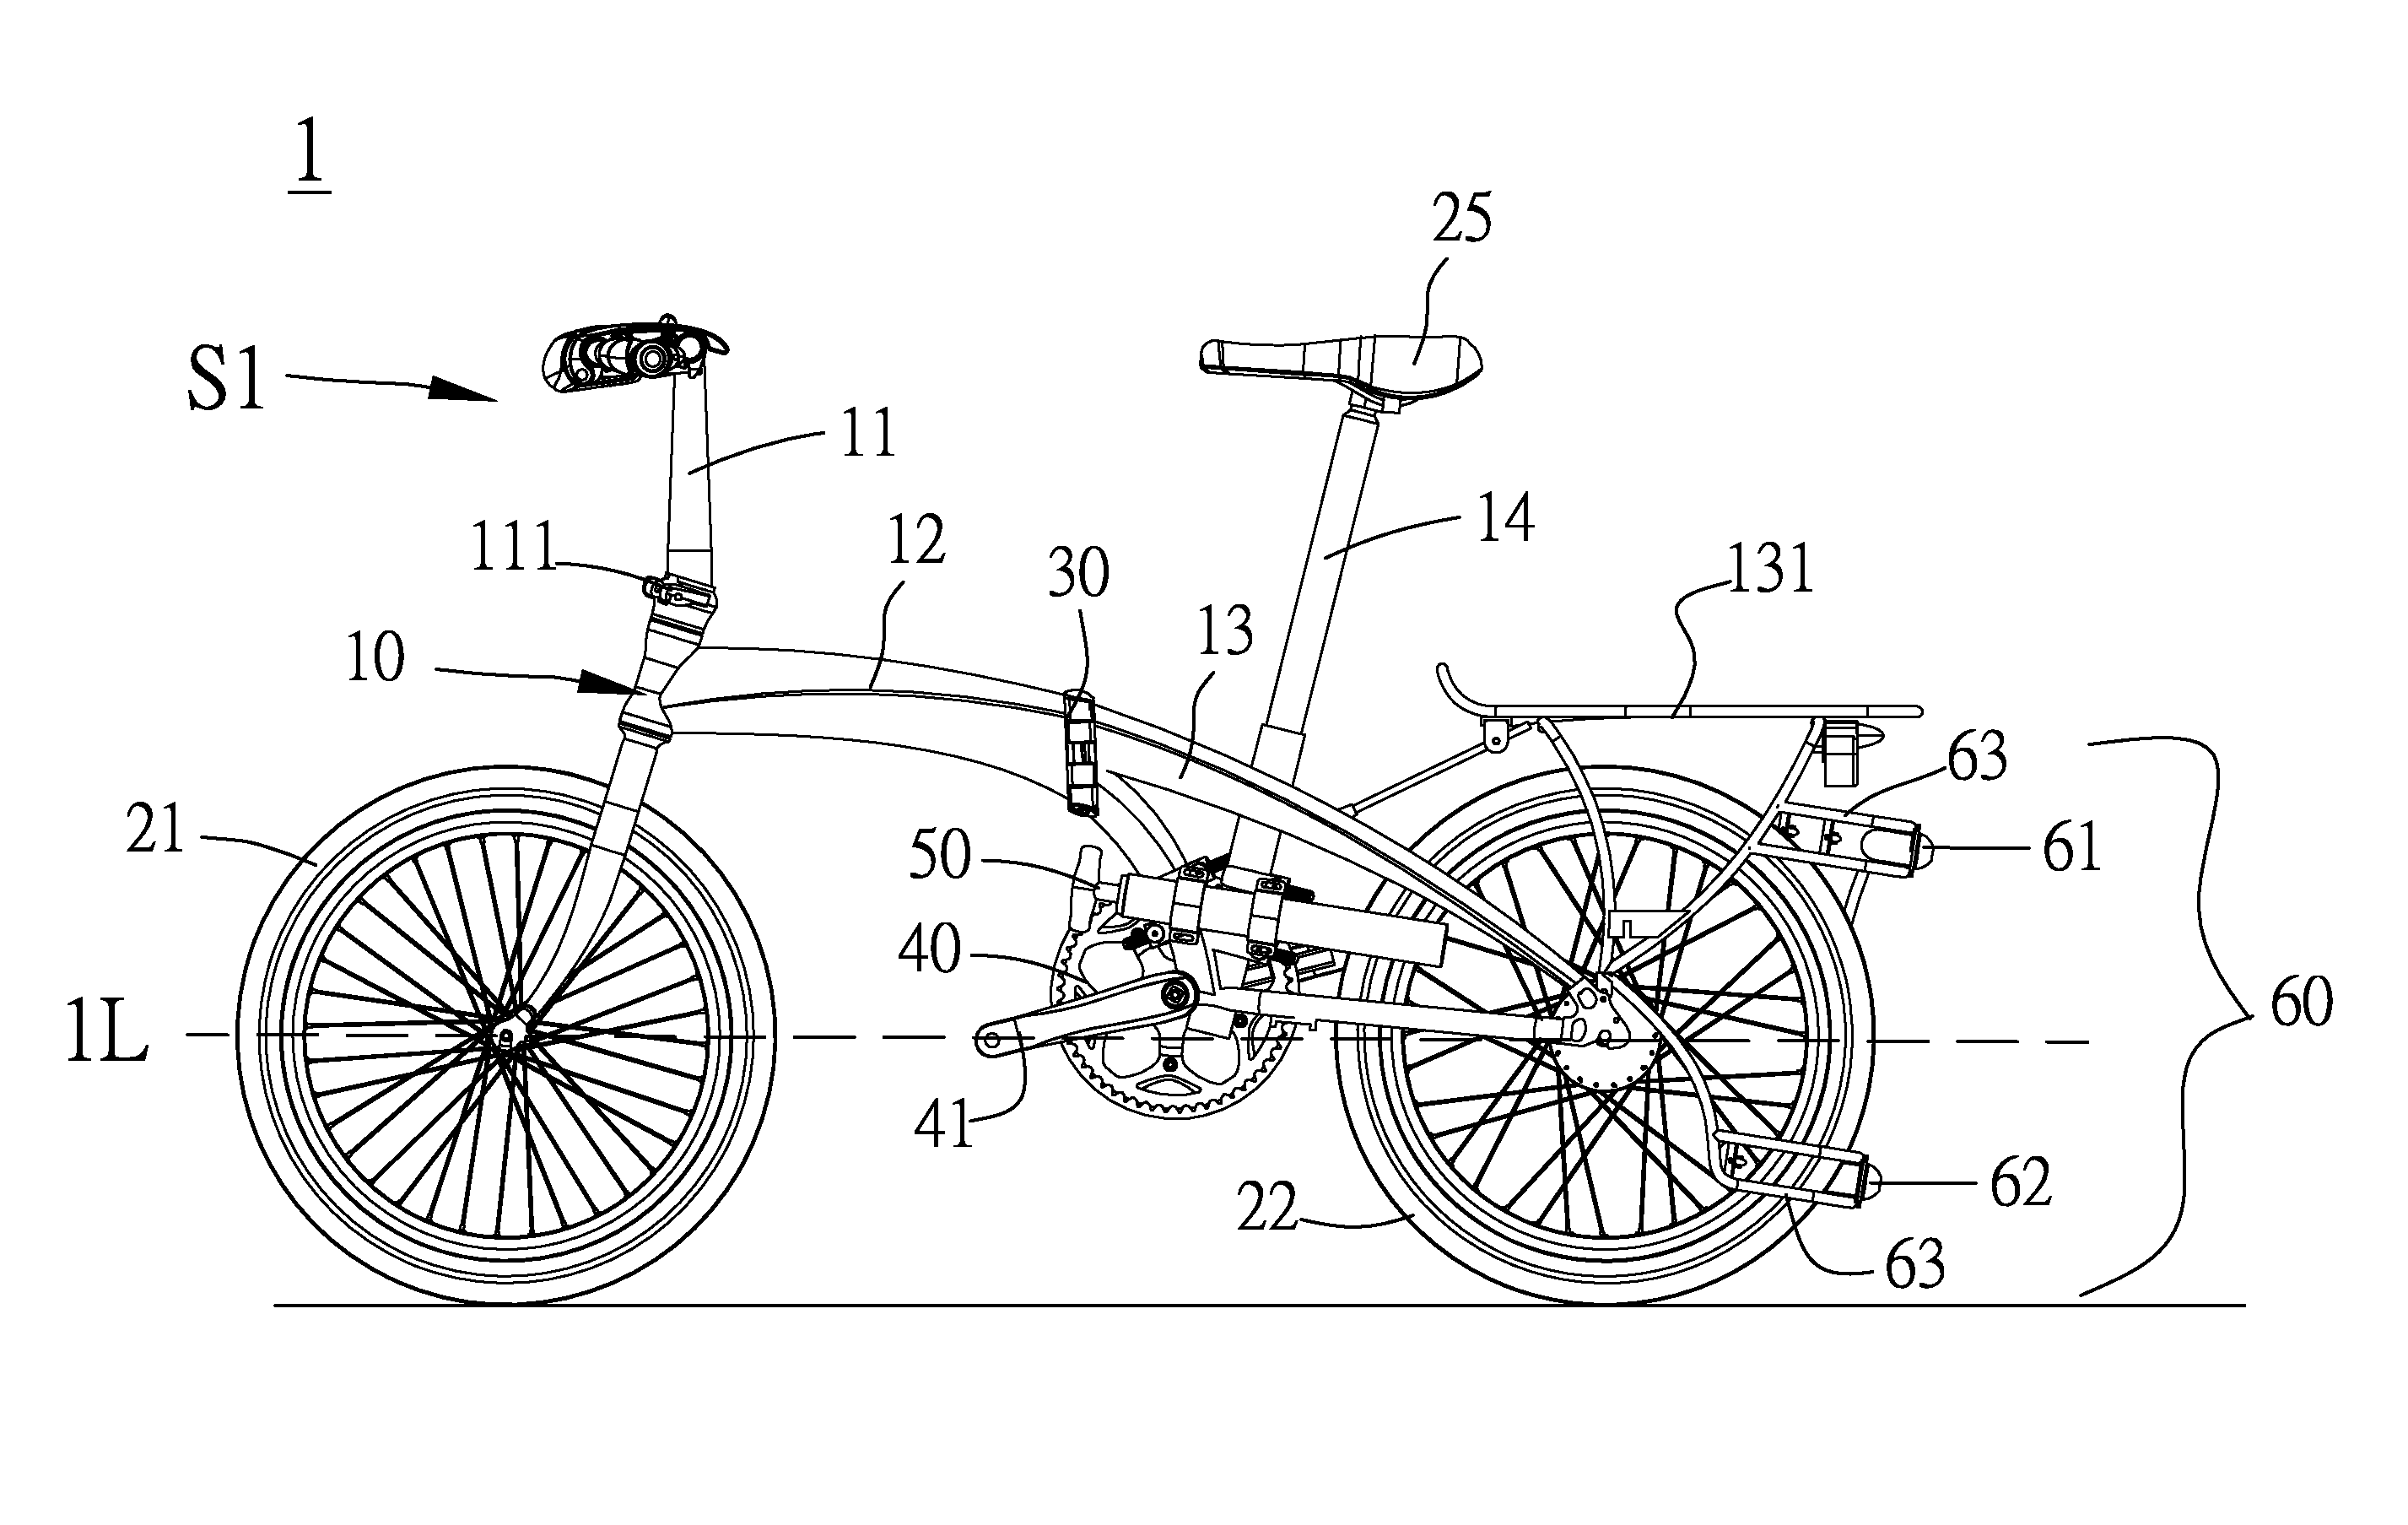 Trolley-like folding bicycle